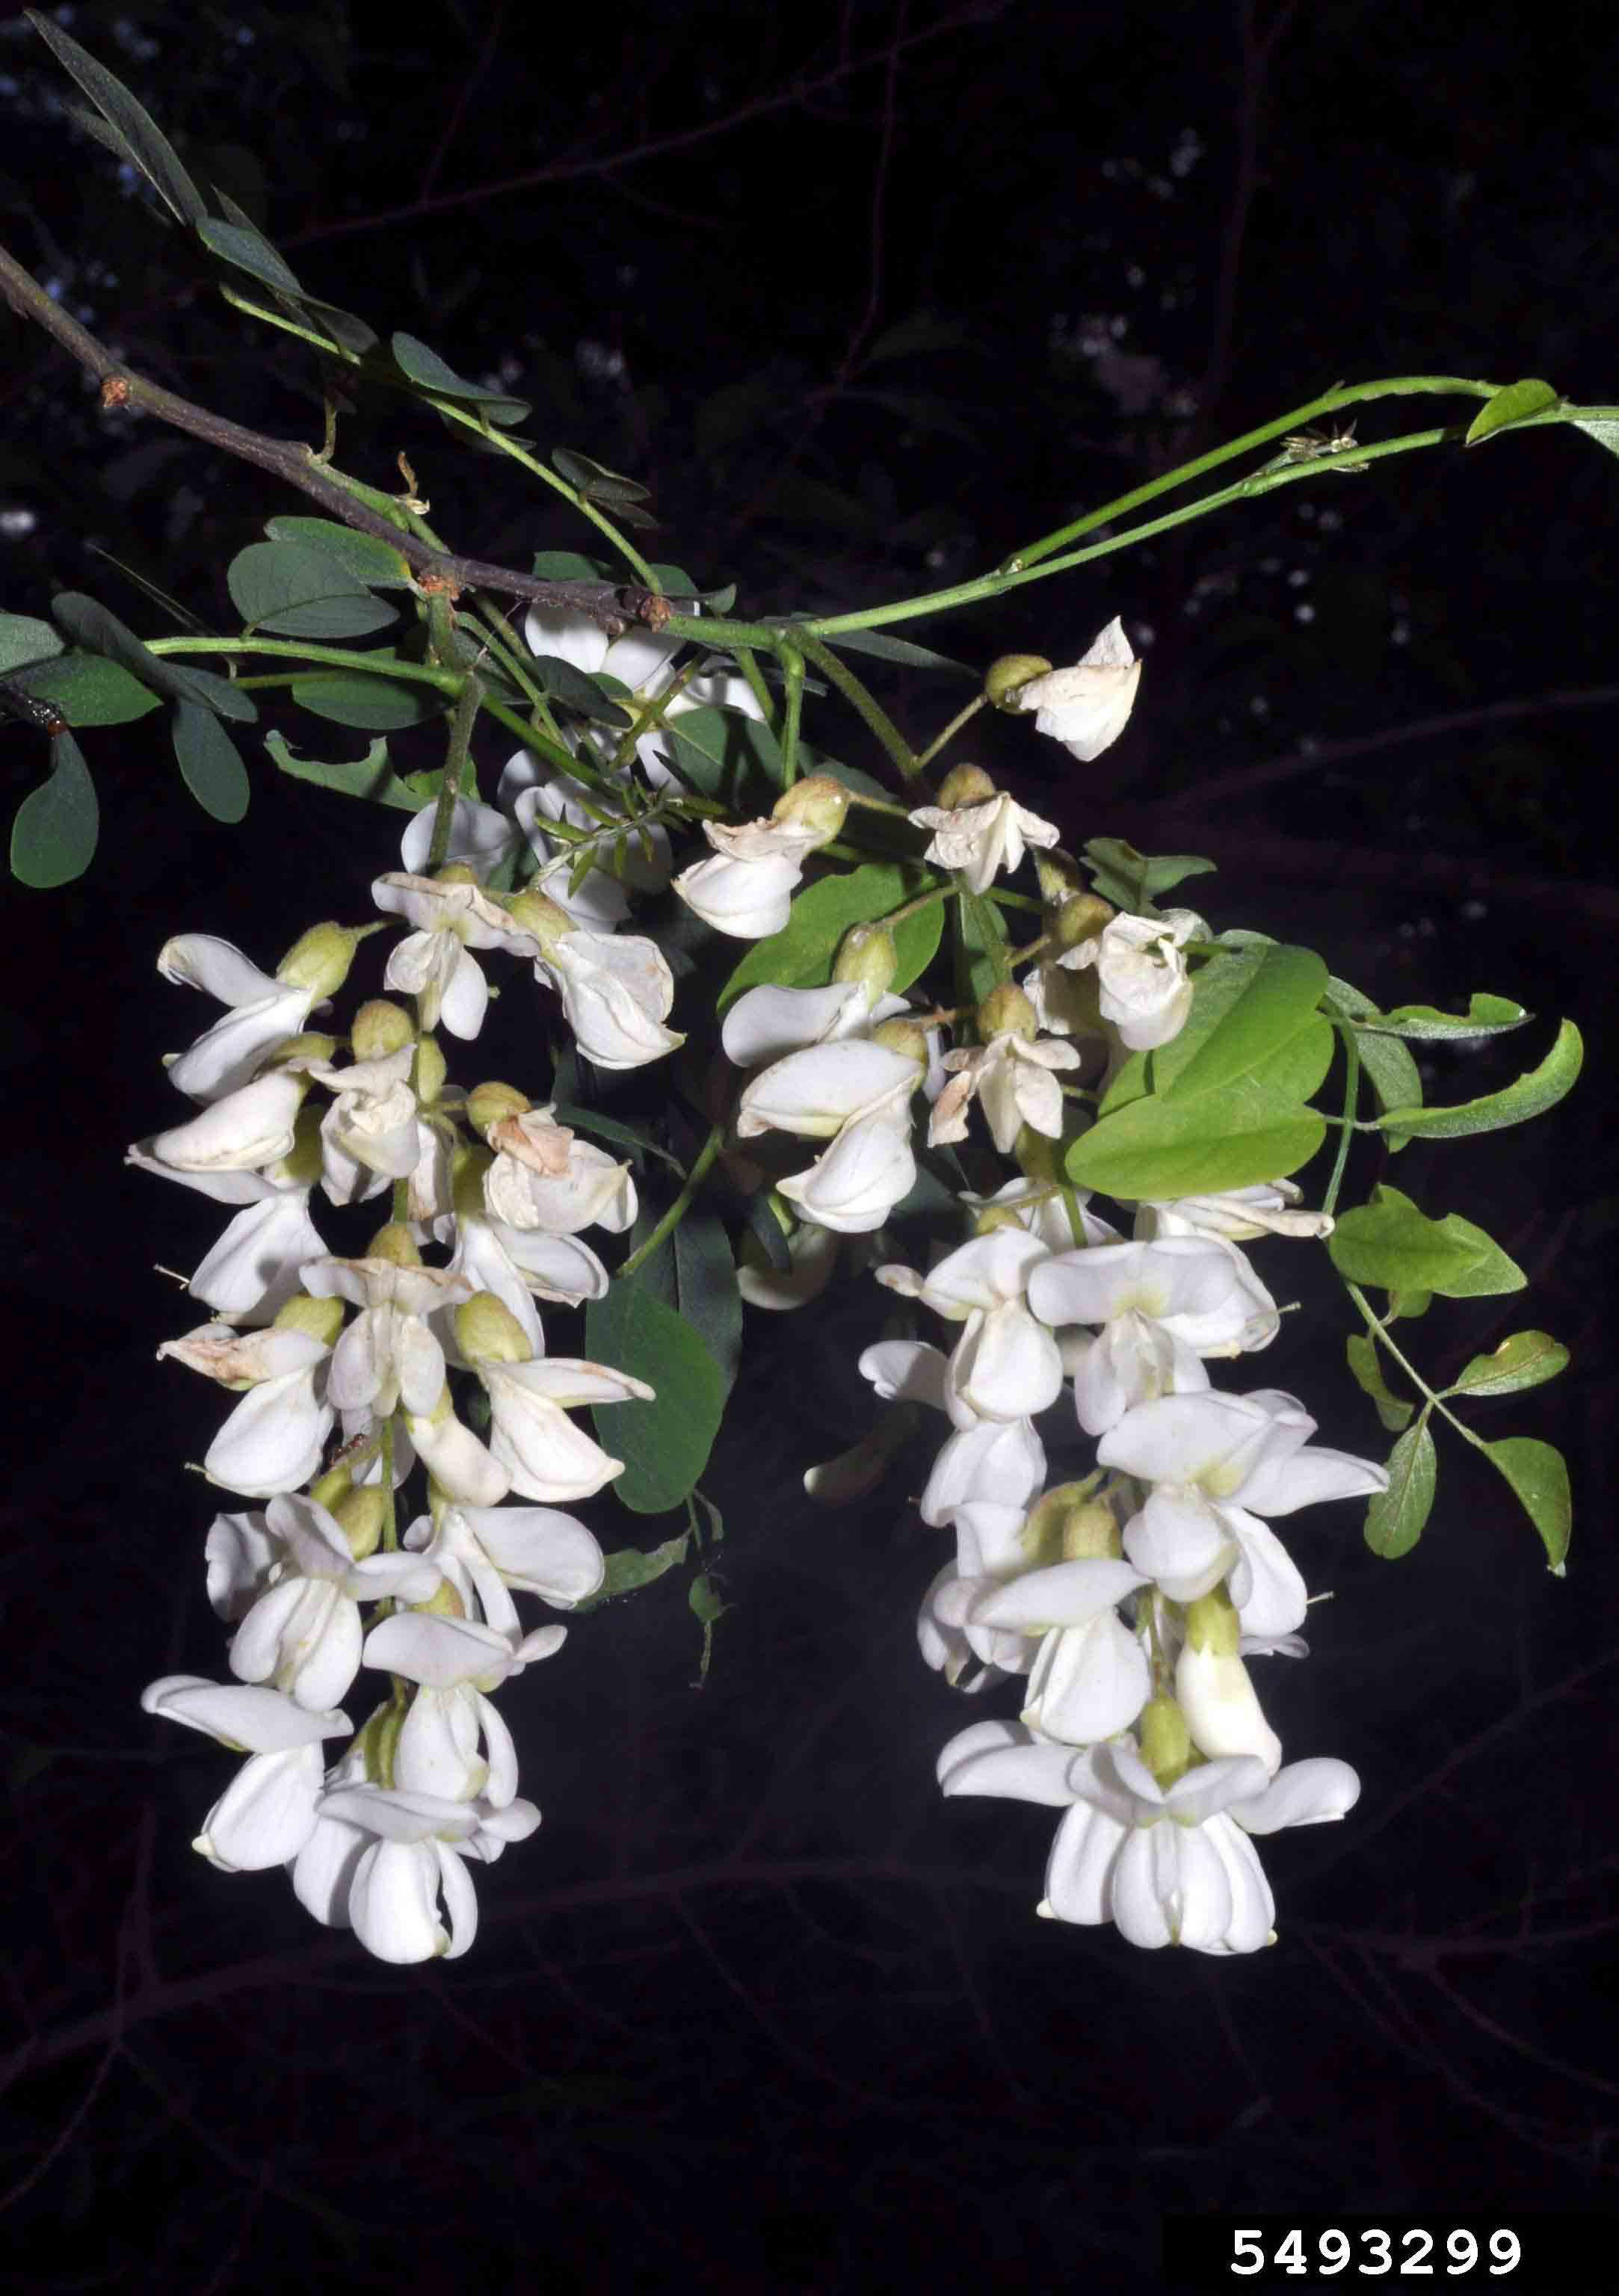 Black locust flowers in 4"-8" raceme